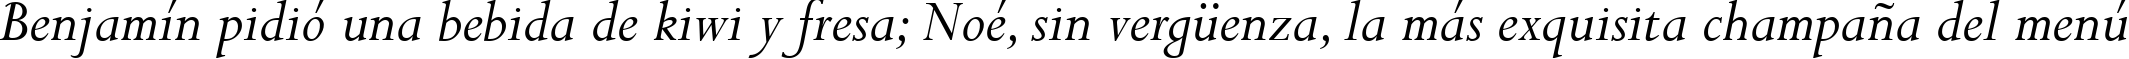 Пример написания шрифтом Perpetua Italic текста на испанском